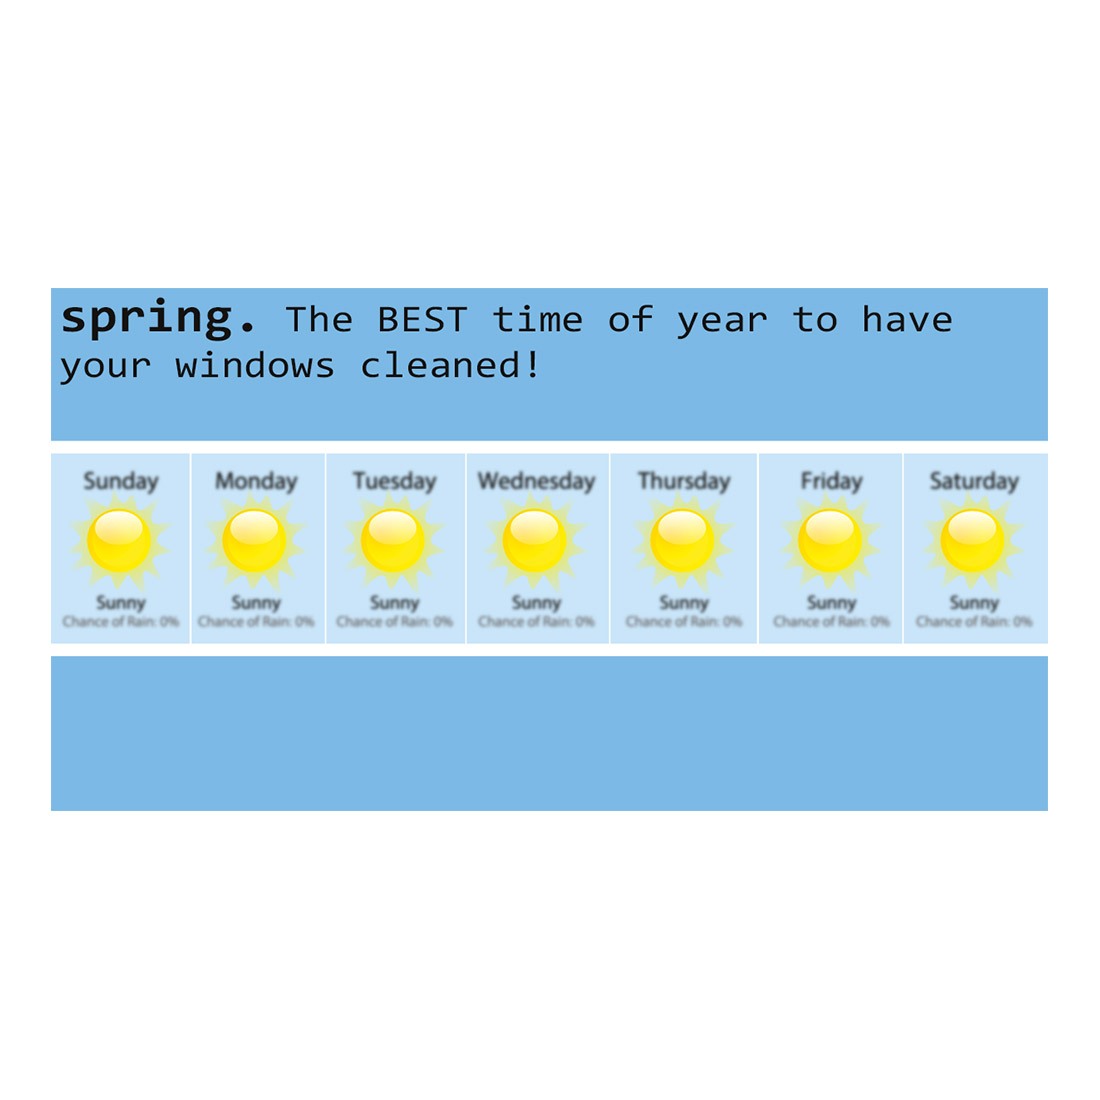 Spring Weather Forecast Facebook Ad